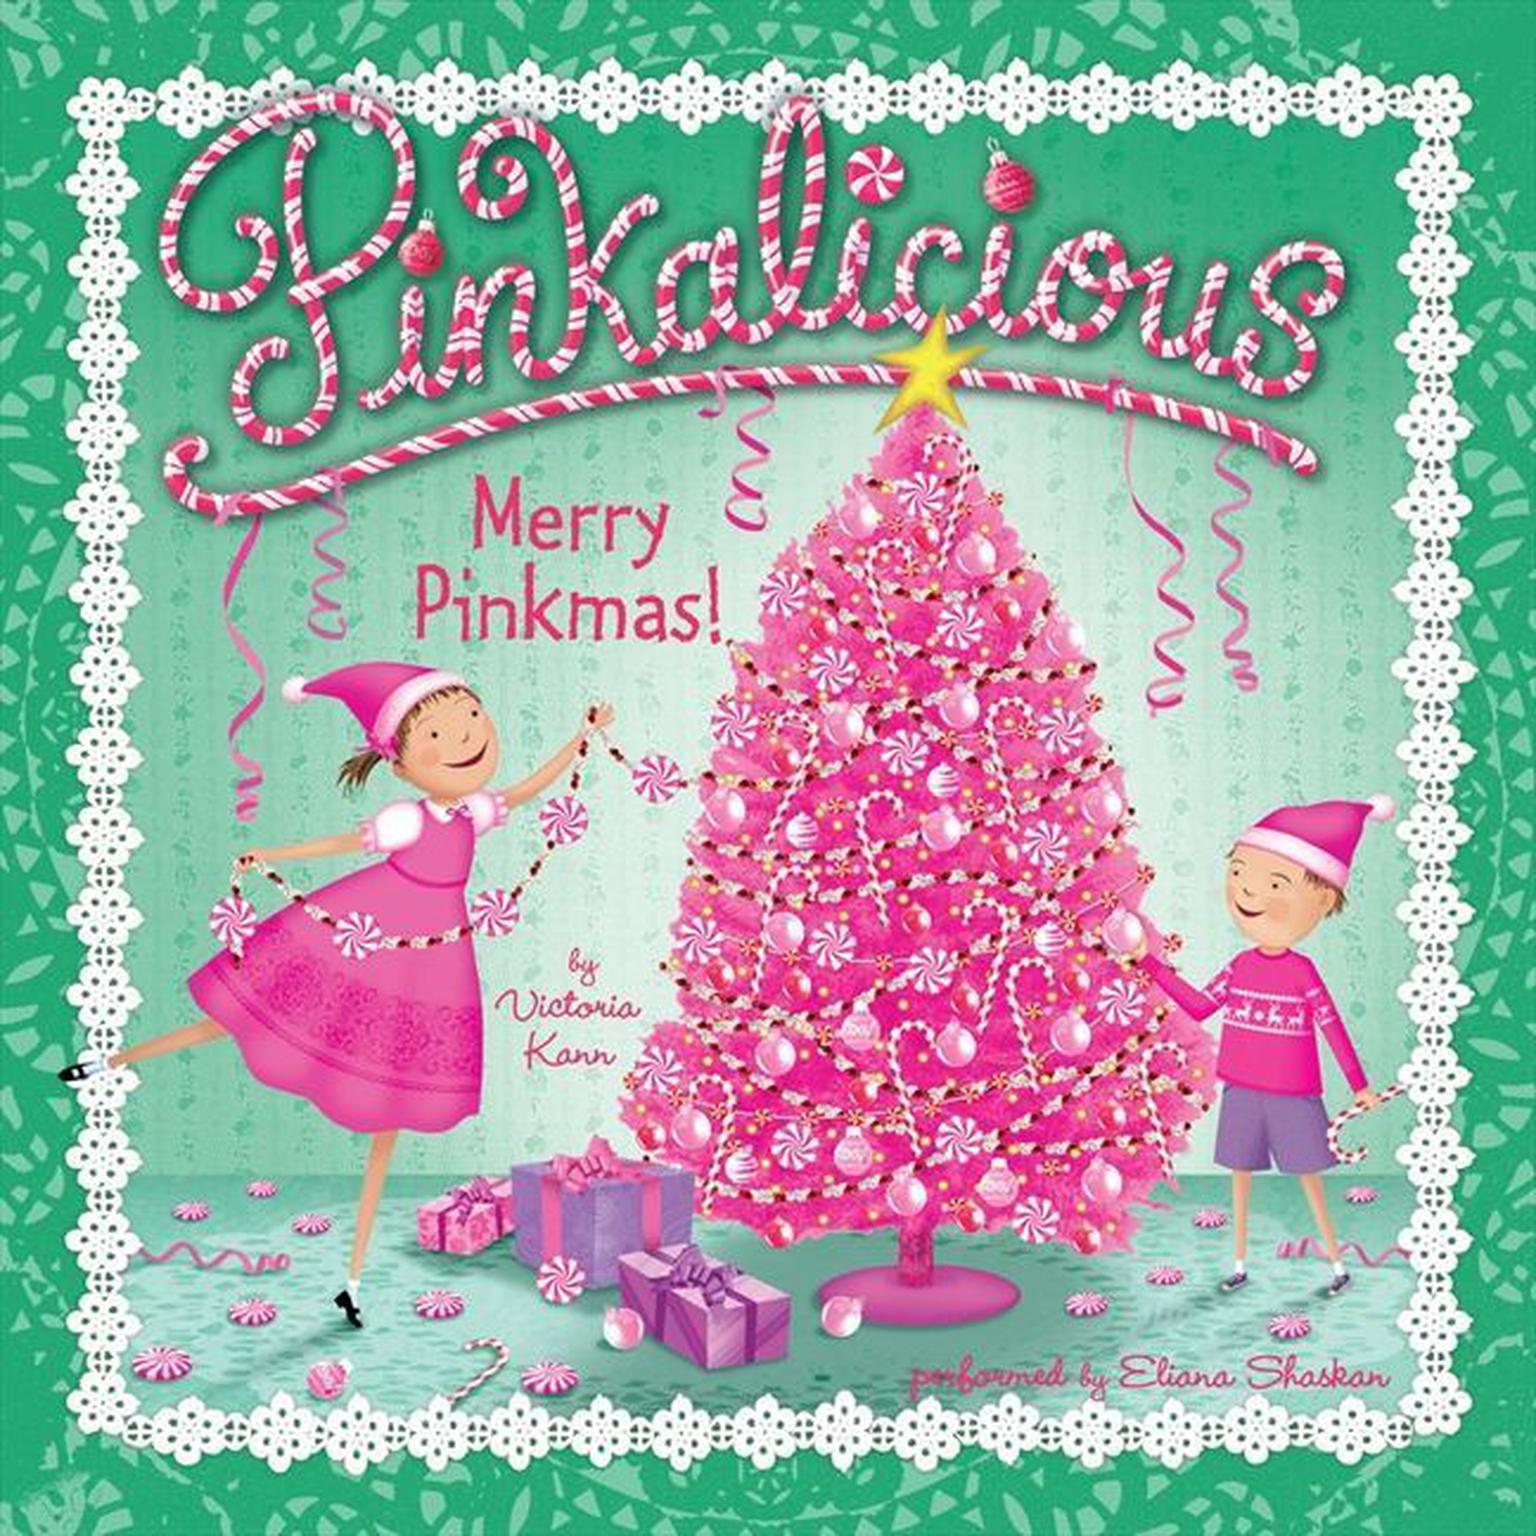 Pinkalicious: Merry Pinkmas! Audiobook, by Victoria Kann